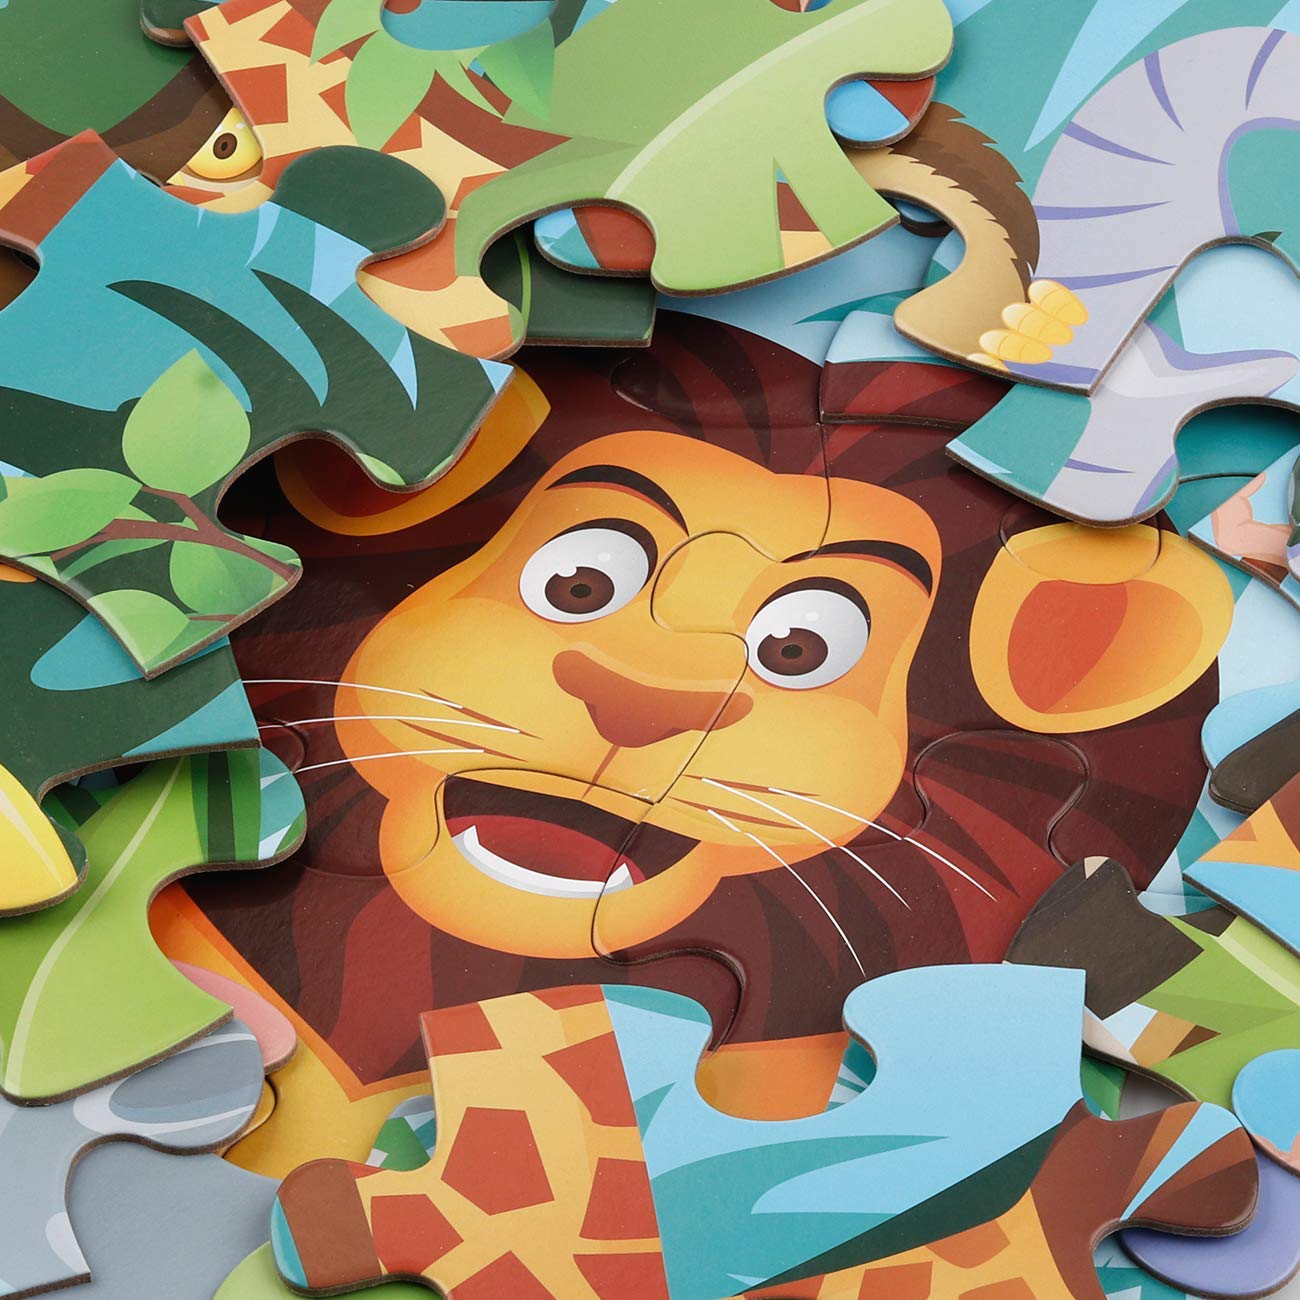 Educational Animal Kingdom Jigsaw Puzzle